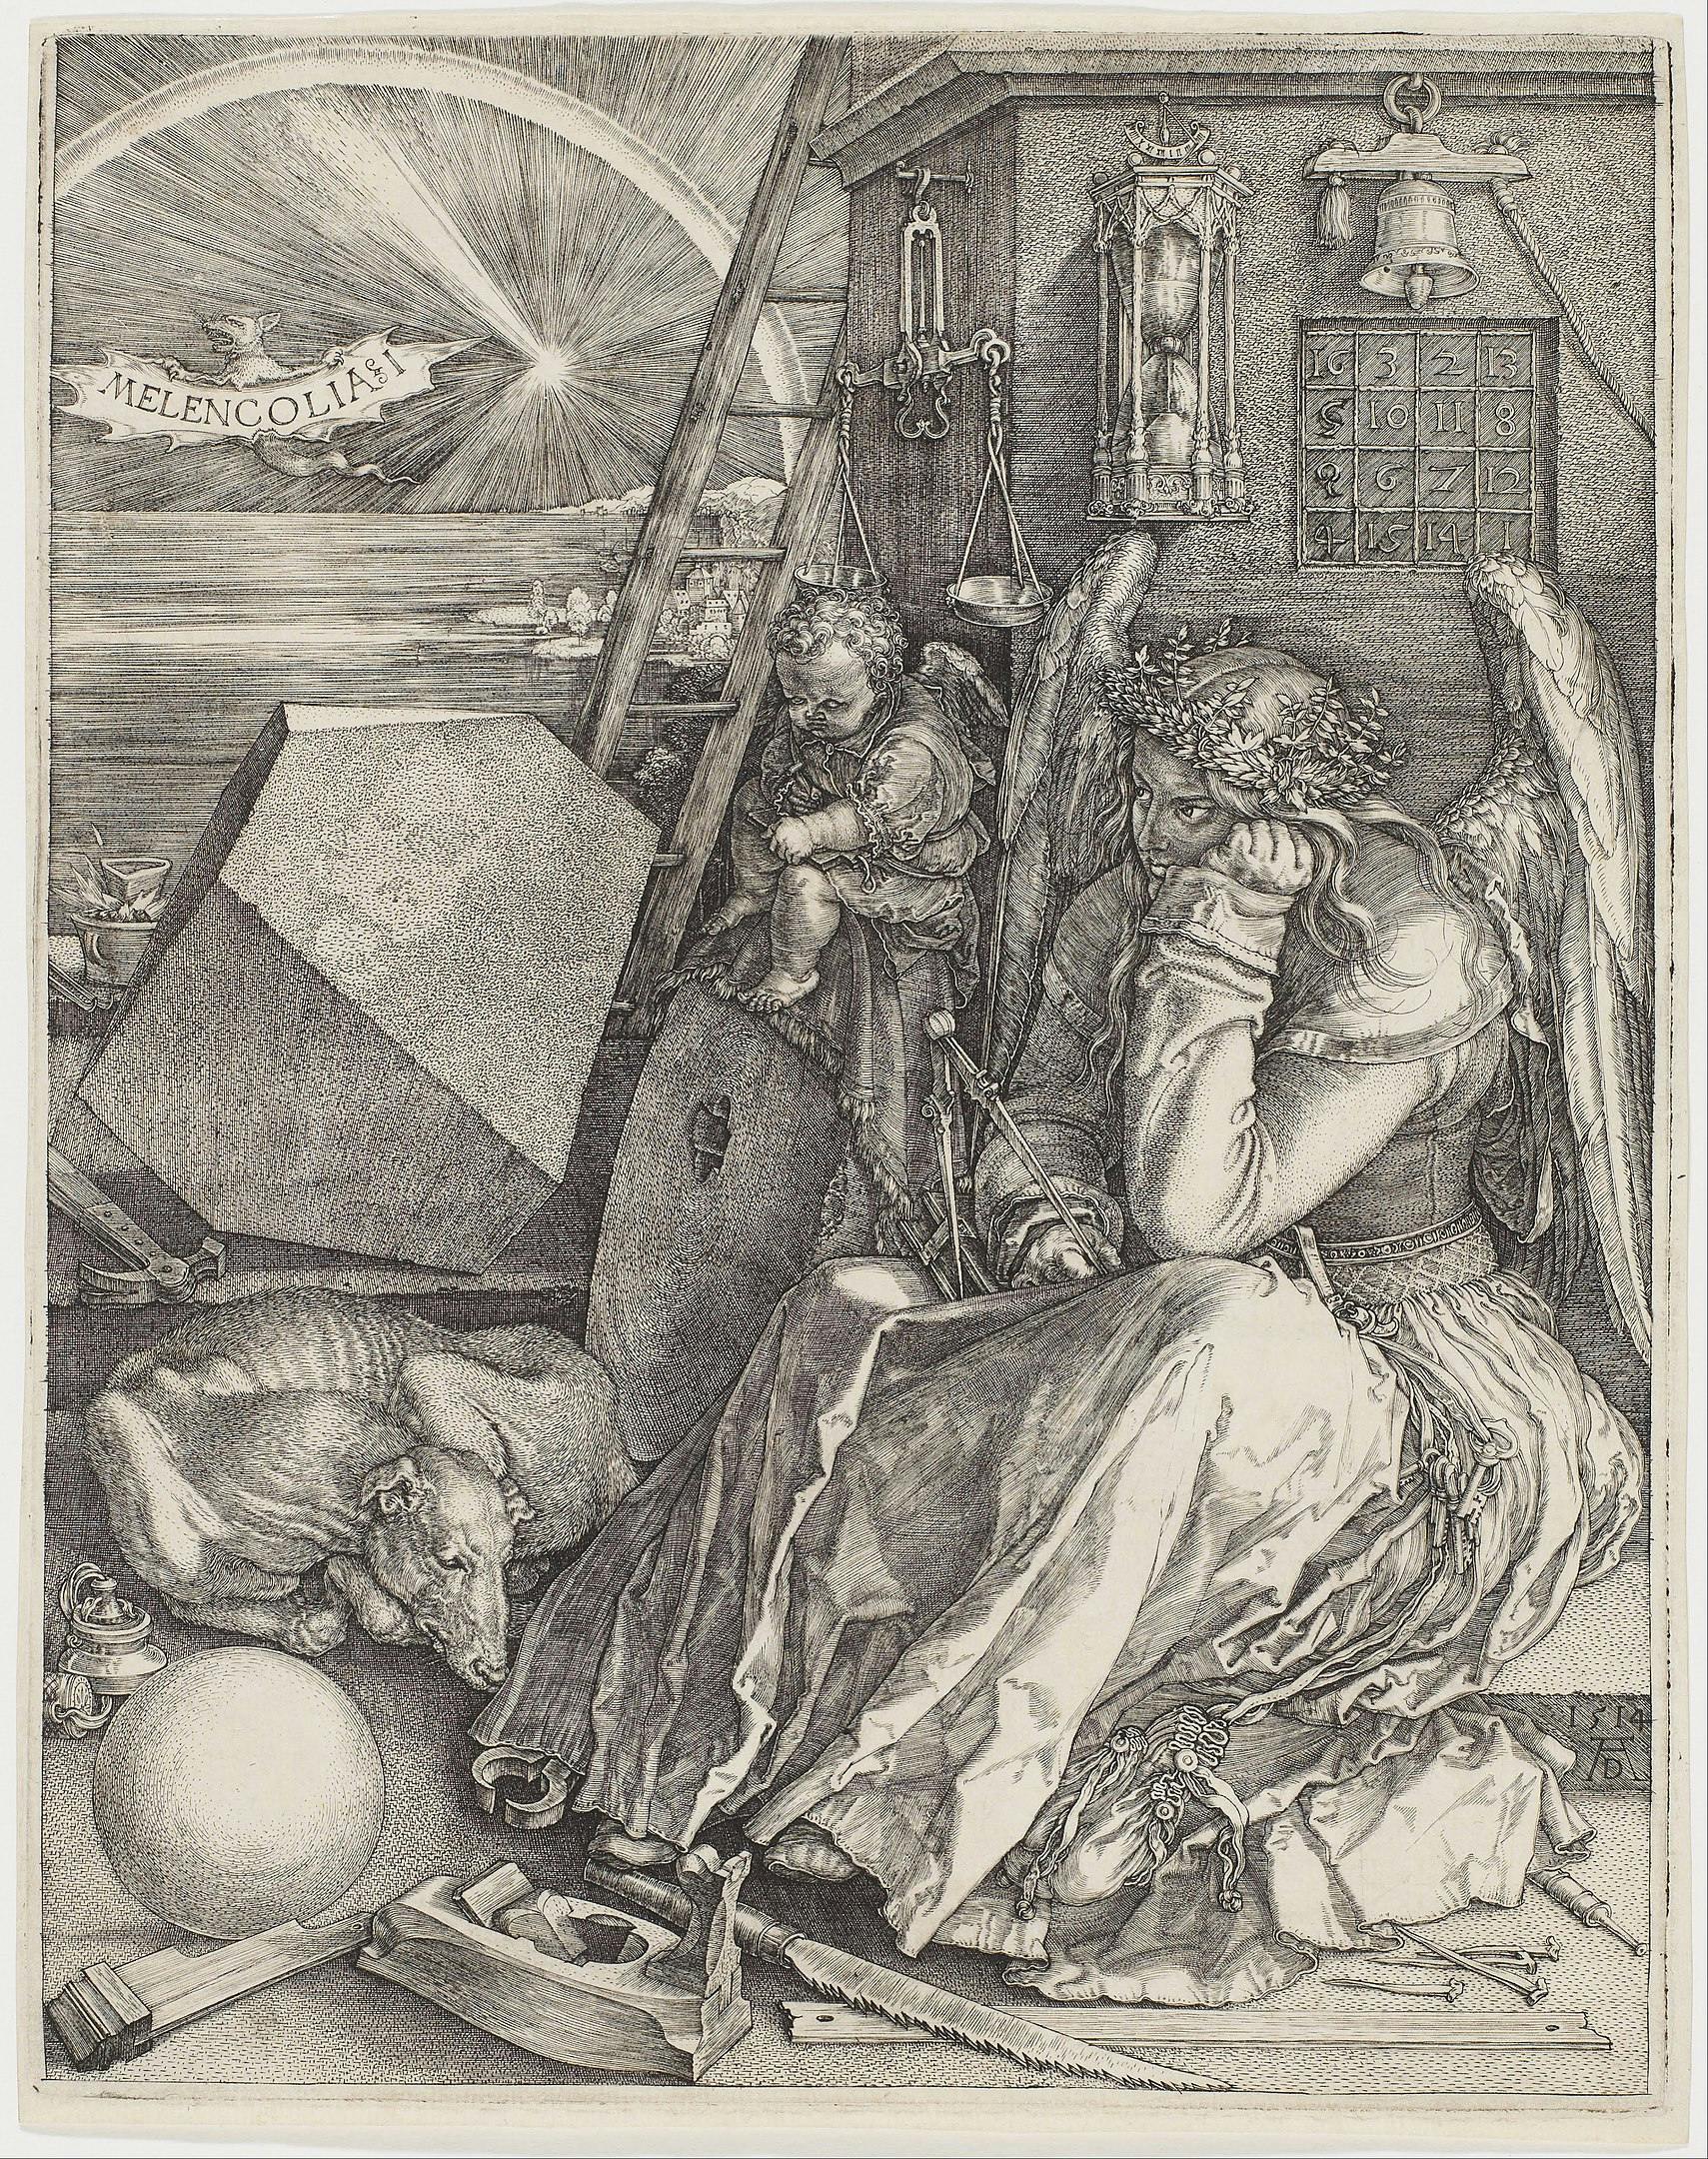 Melencolia I, 1514 engraving by Albrecht Dürer